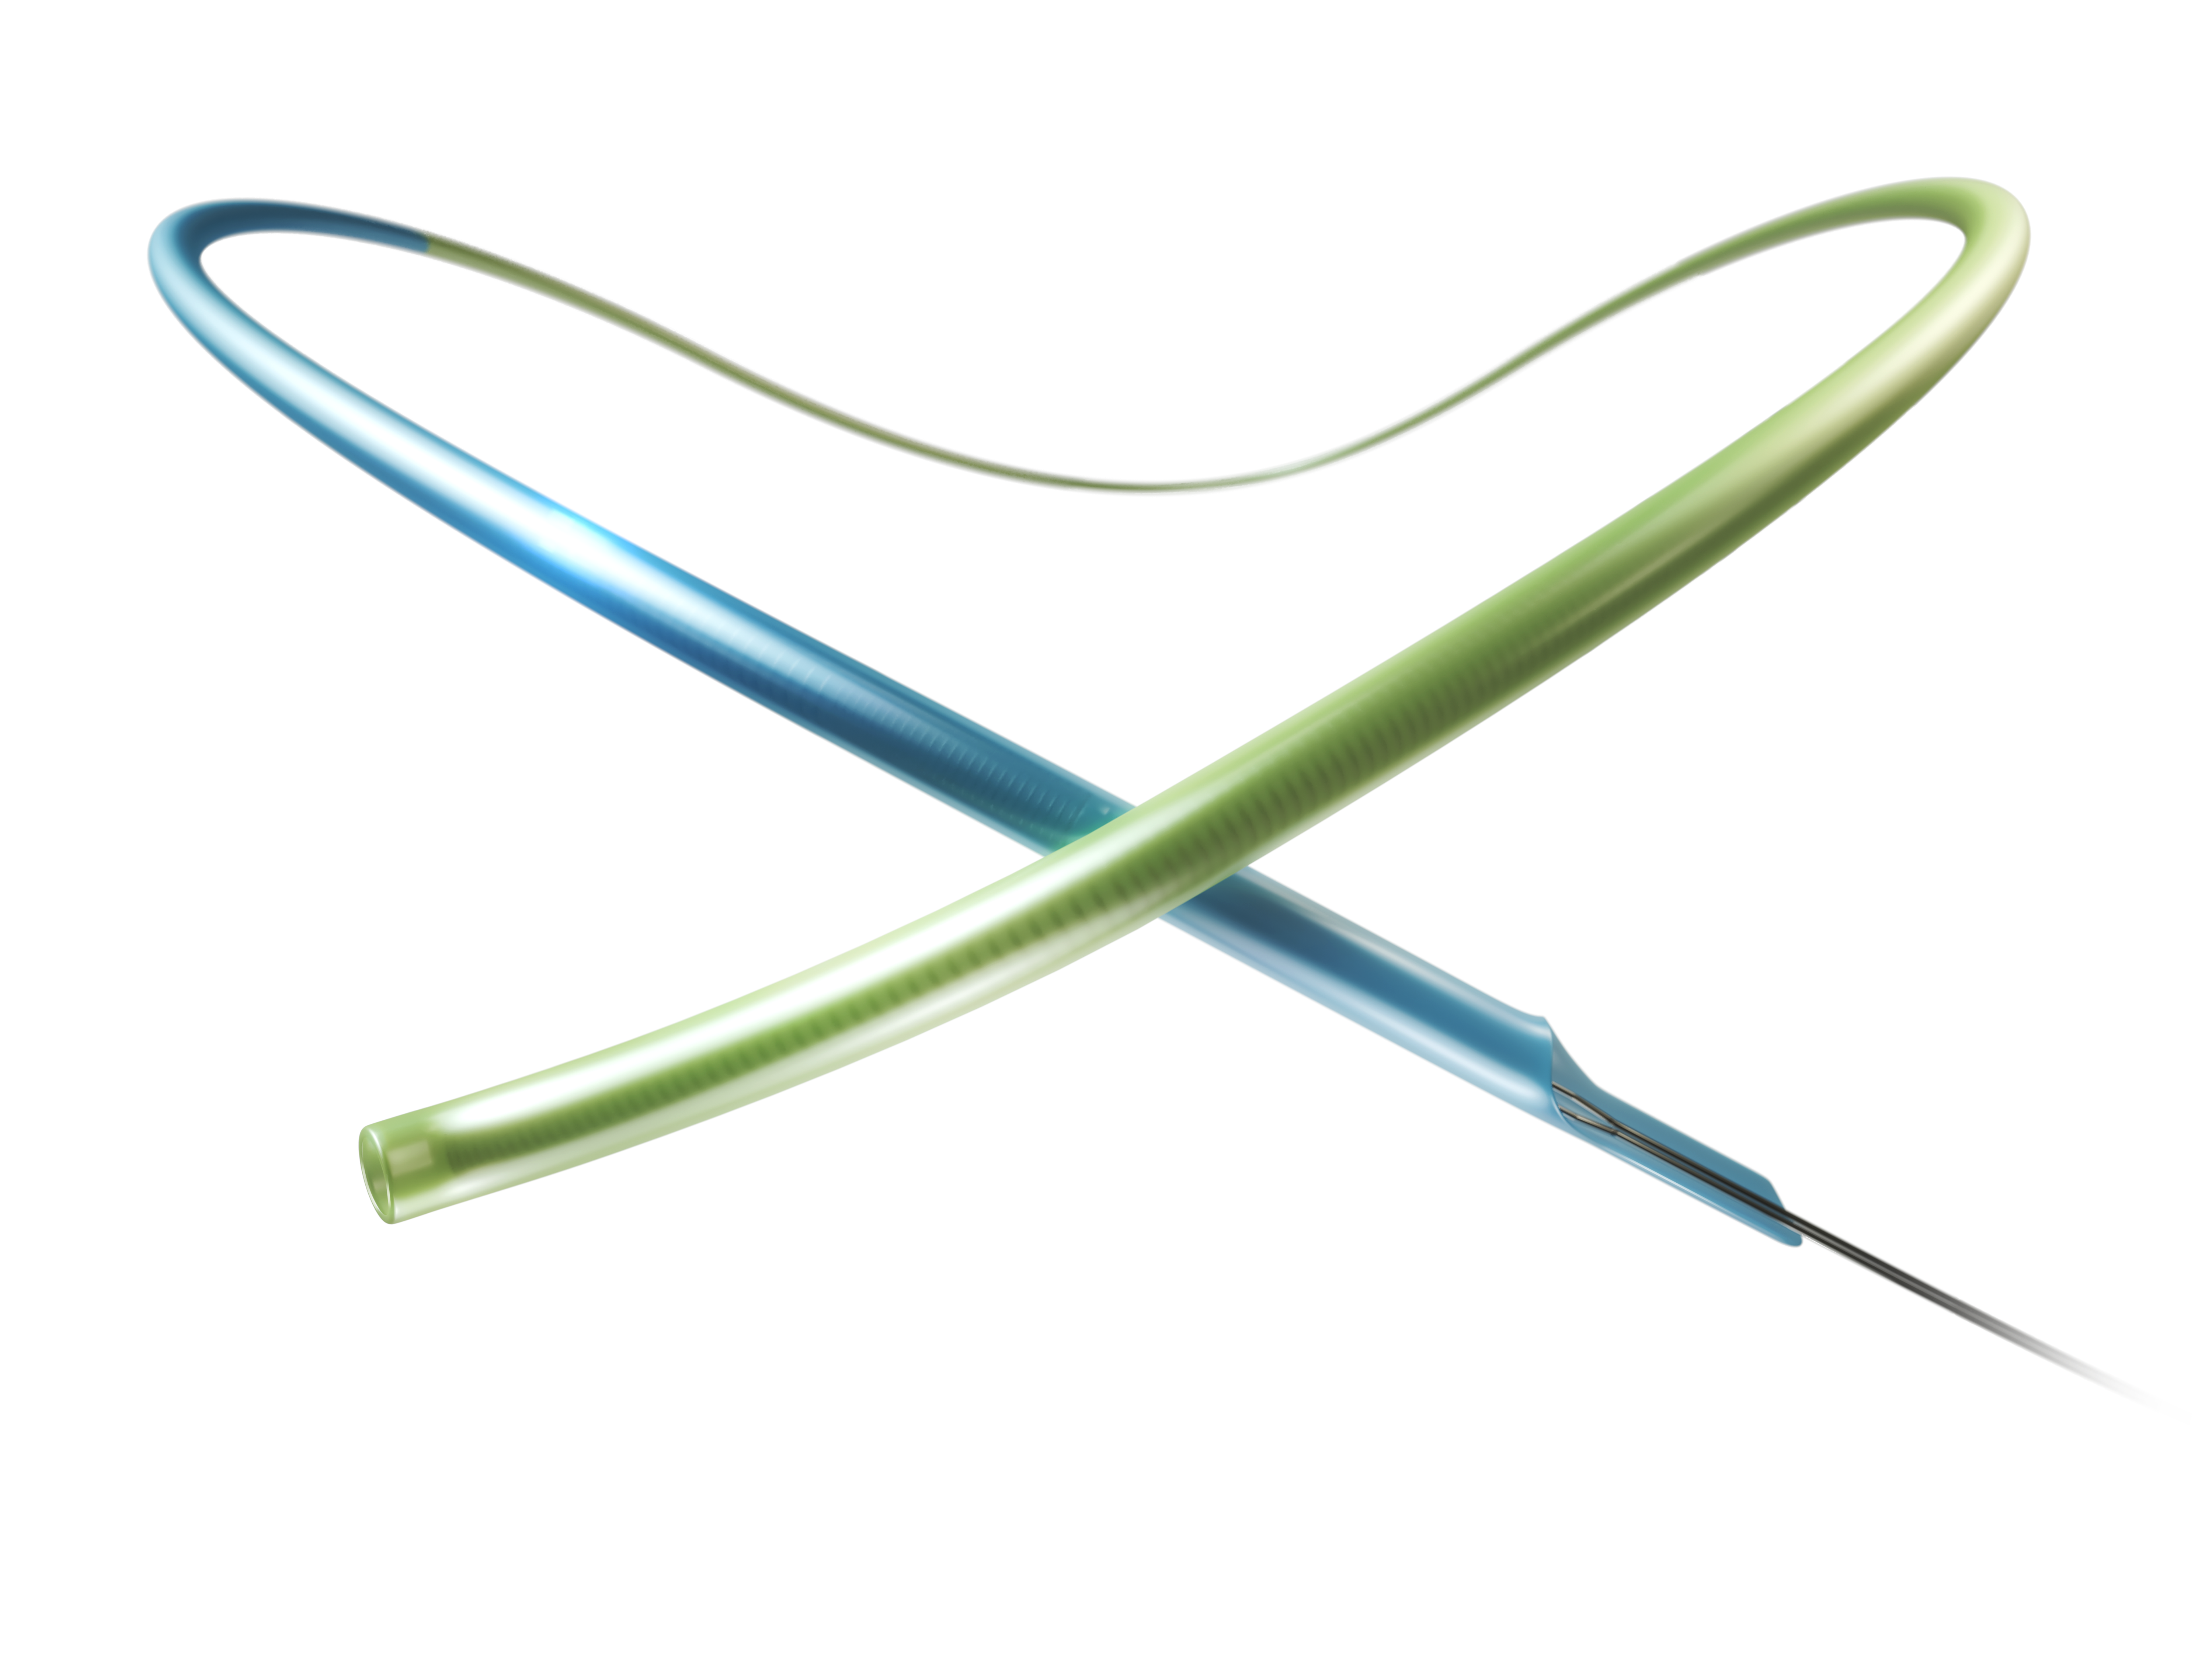 XTender guiding catheter extension